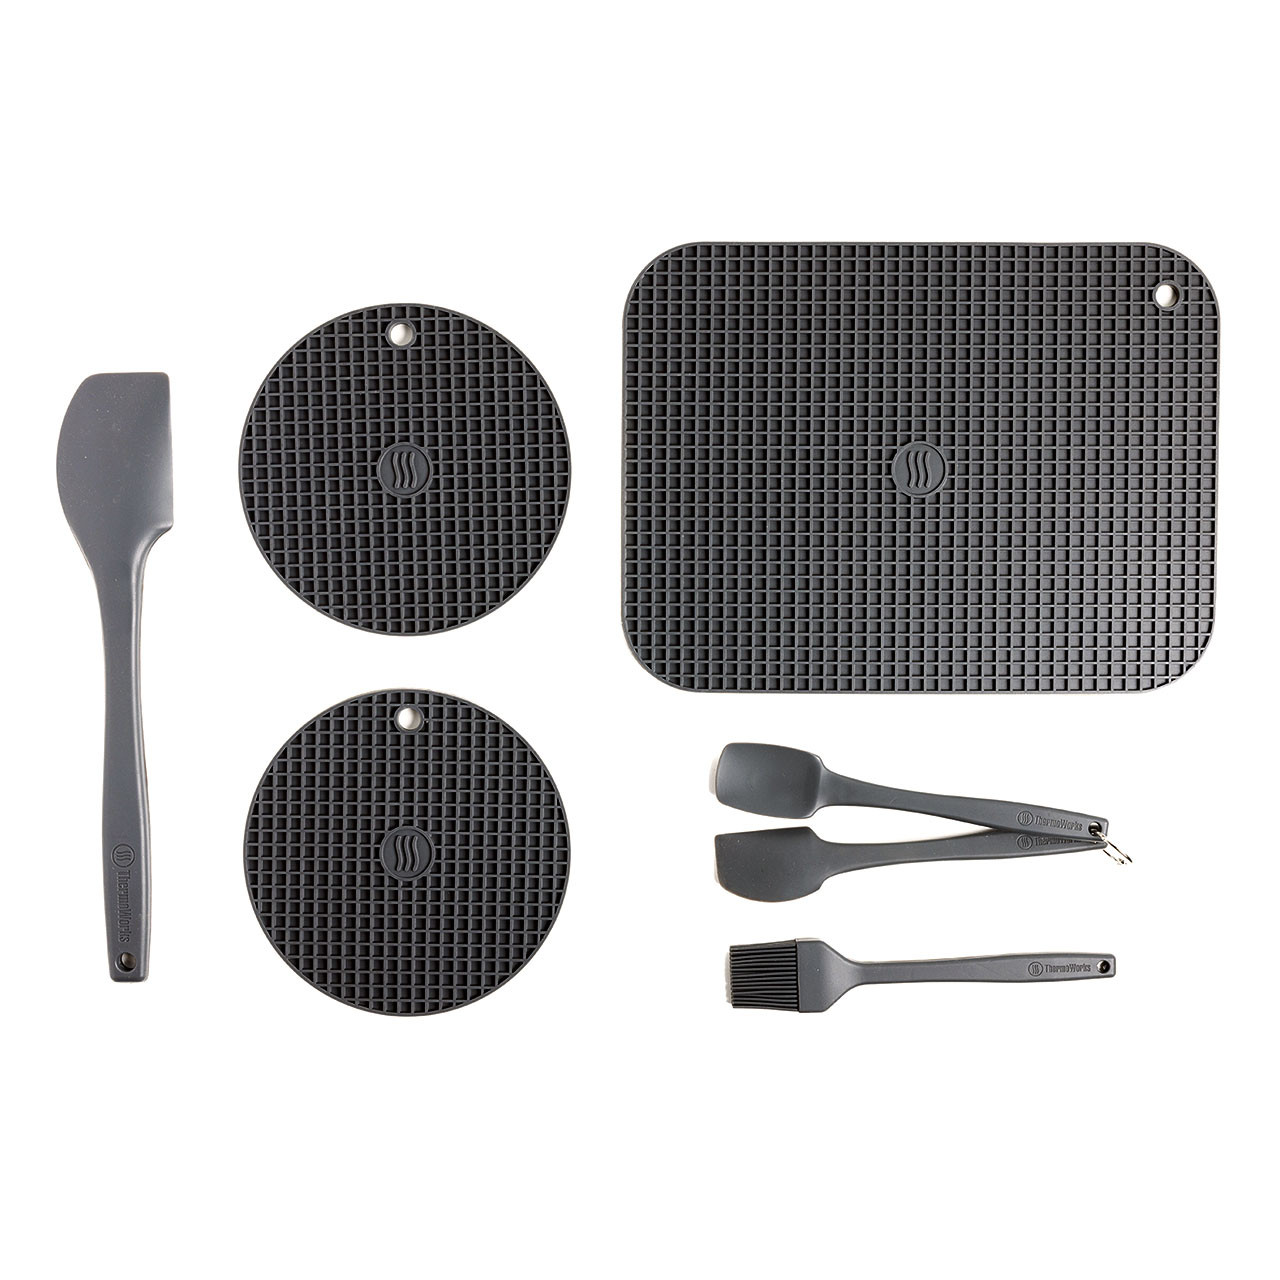 black silicone mat, 2 trivets, spatulas and brush